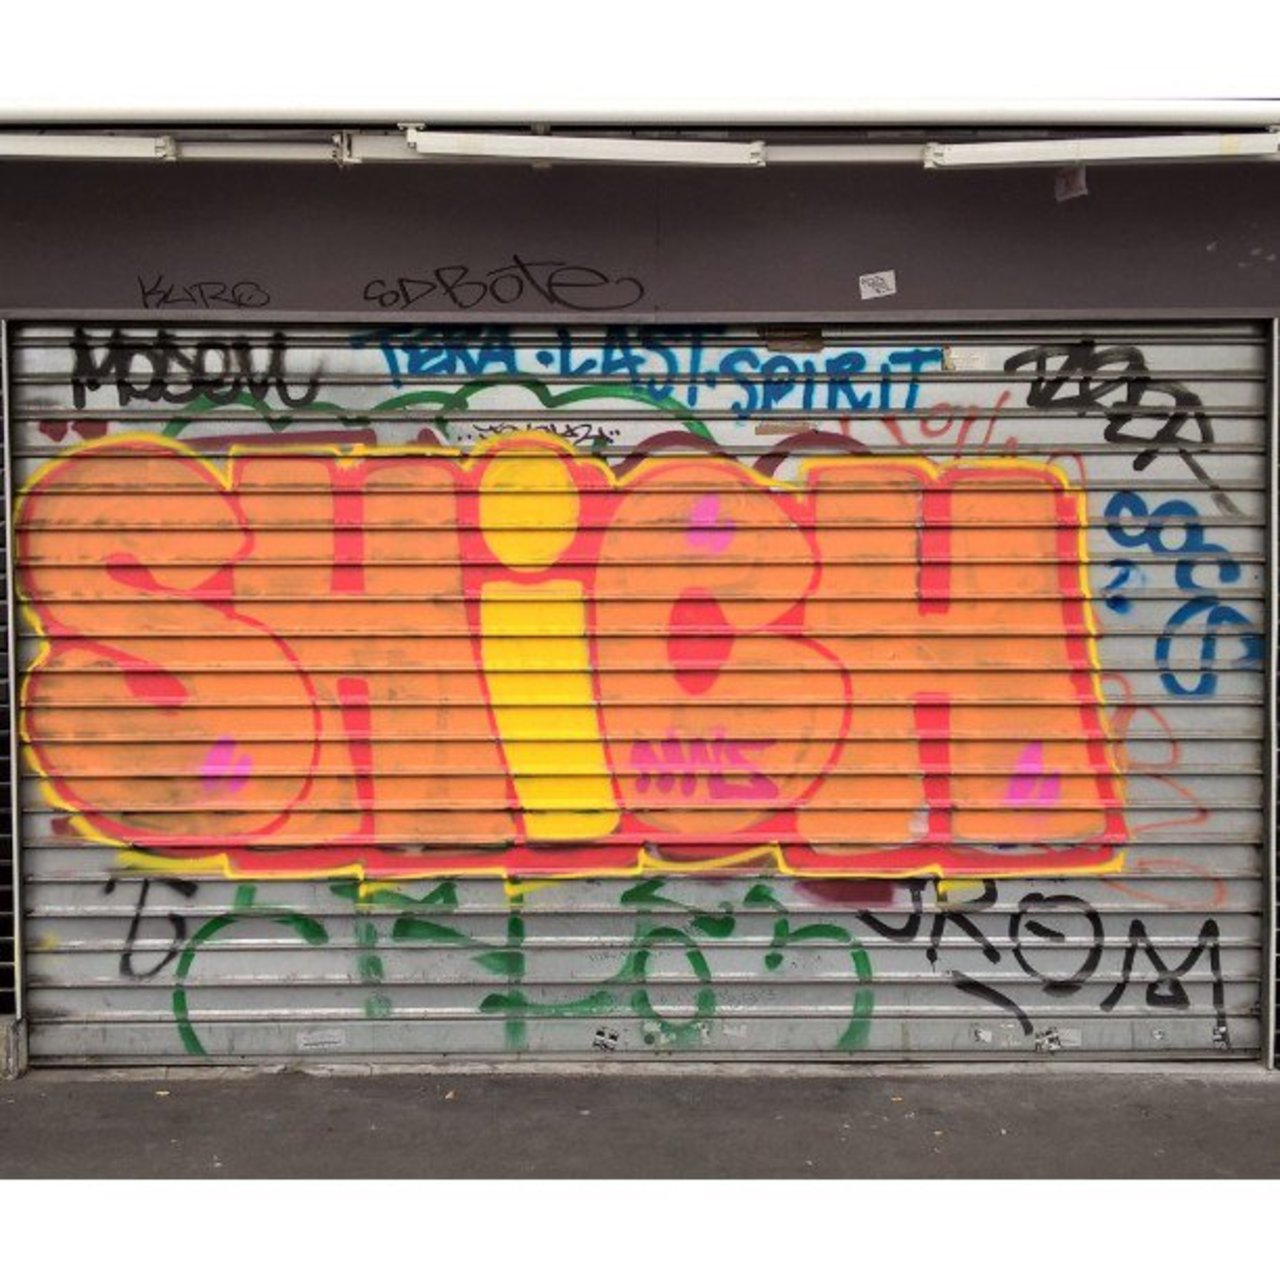 #Paris #graffiti photo by @maxdimontemarciano http://ift.tt/1LSs51u #StreetArt https://t.co/0pDTzlmriK